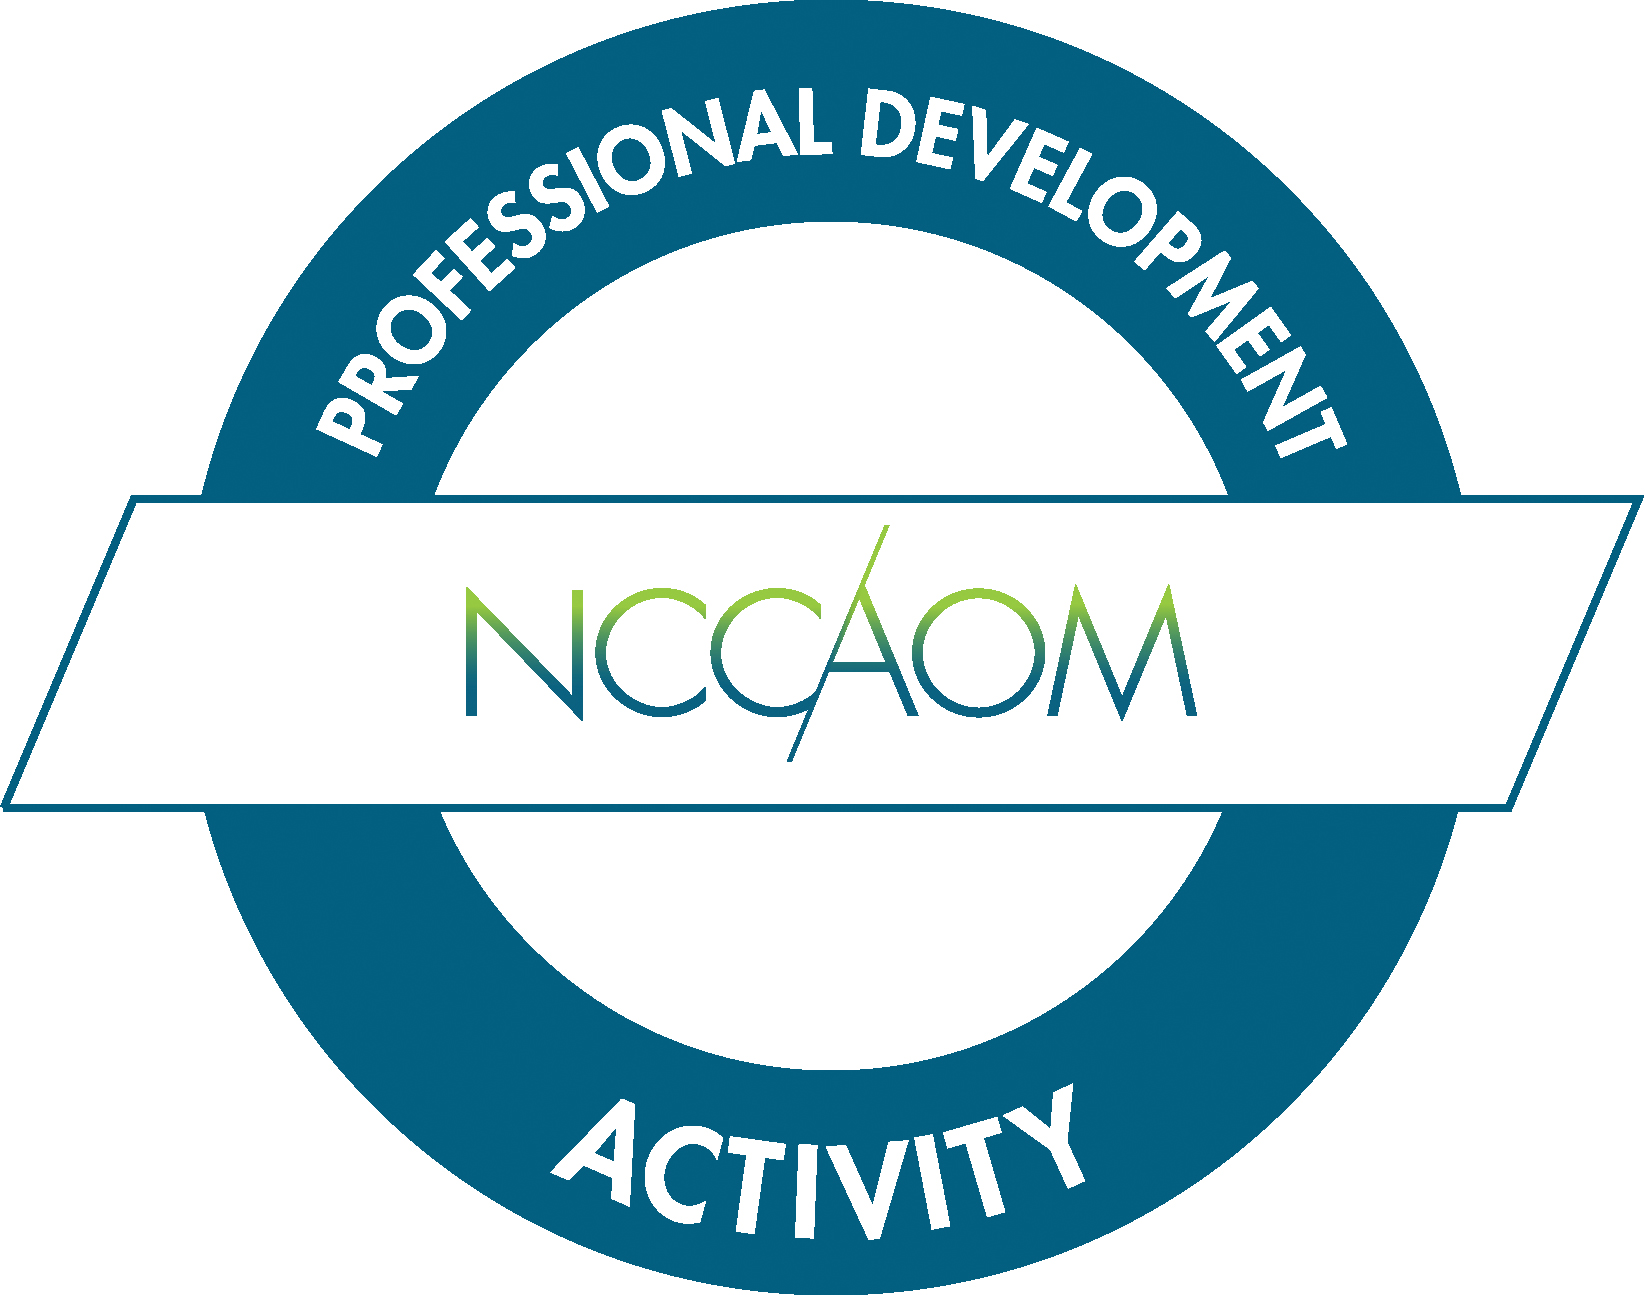 NCCAOM Professional Development Activity